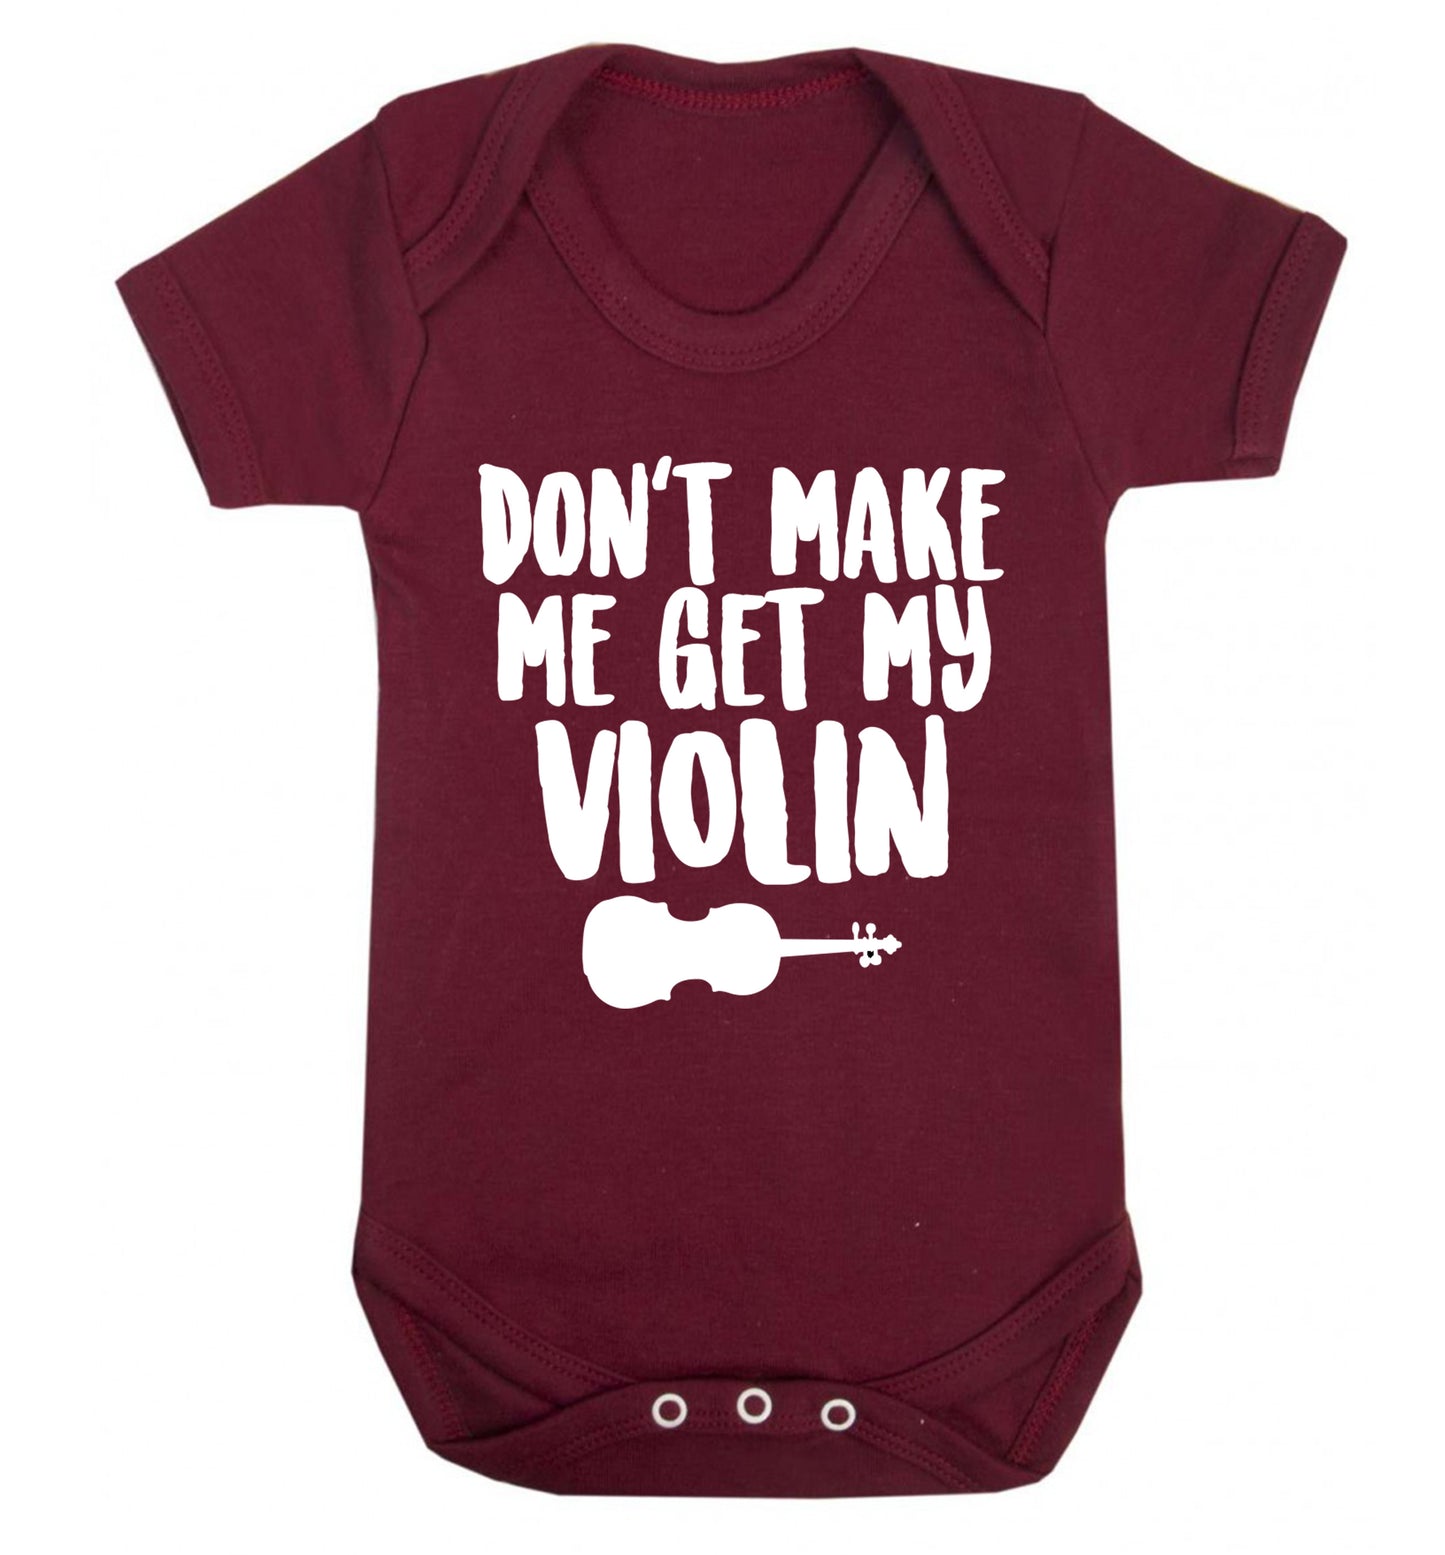 Don't make me get my violin Baby Vest maroon 18-24 months